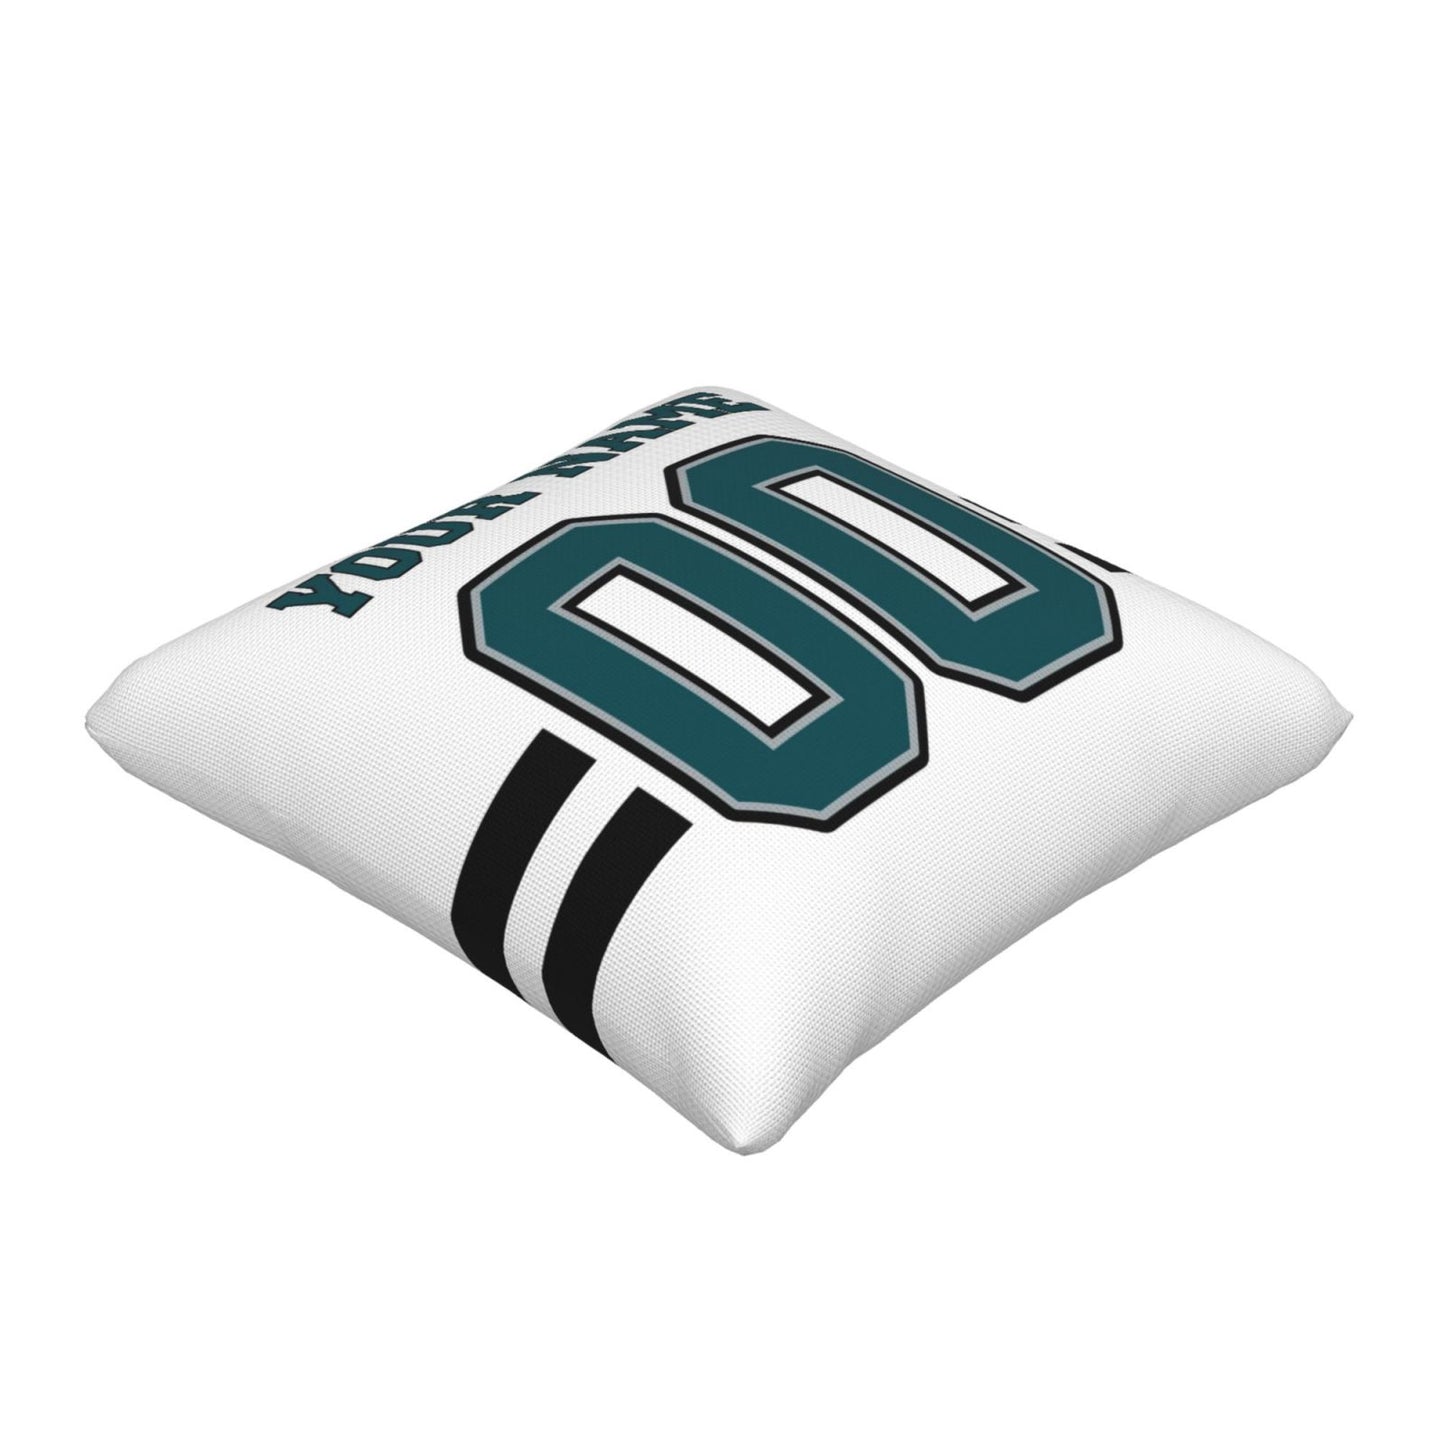 Custom White Philadelphia Eagles Decorative Throw Pillow Case - Print Personalized Football Team Fans Name & Number Birthday Gift